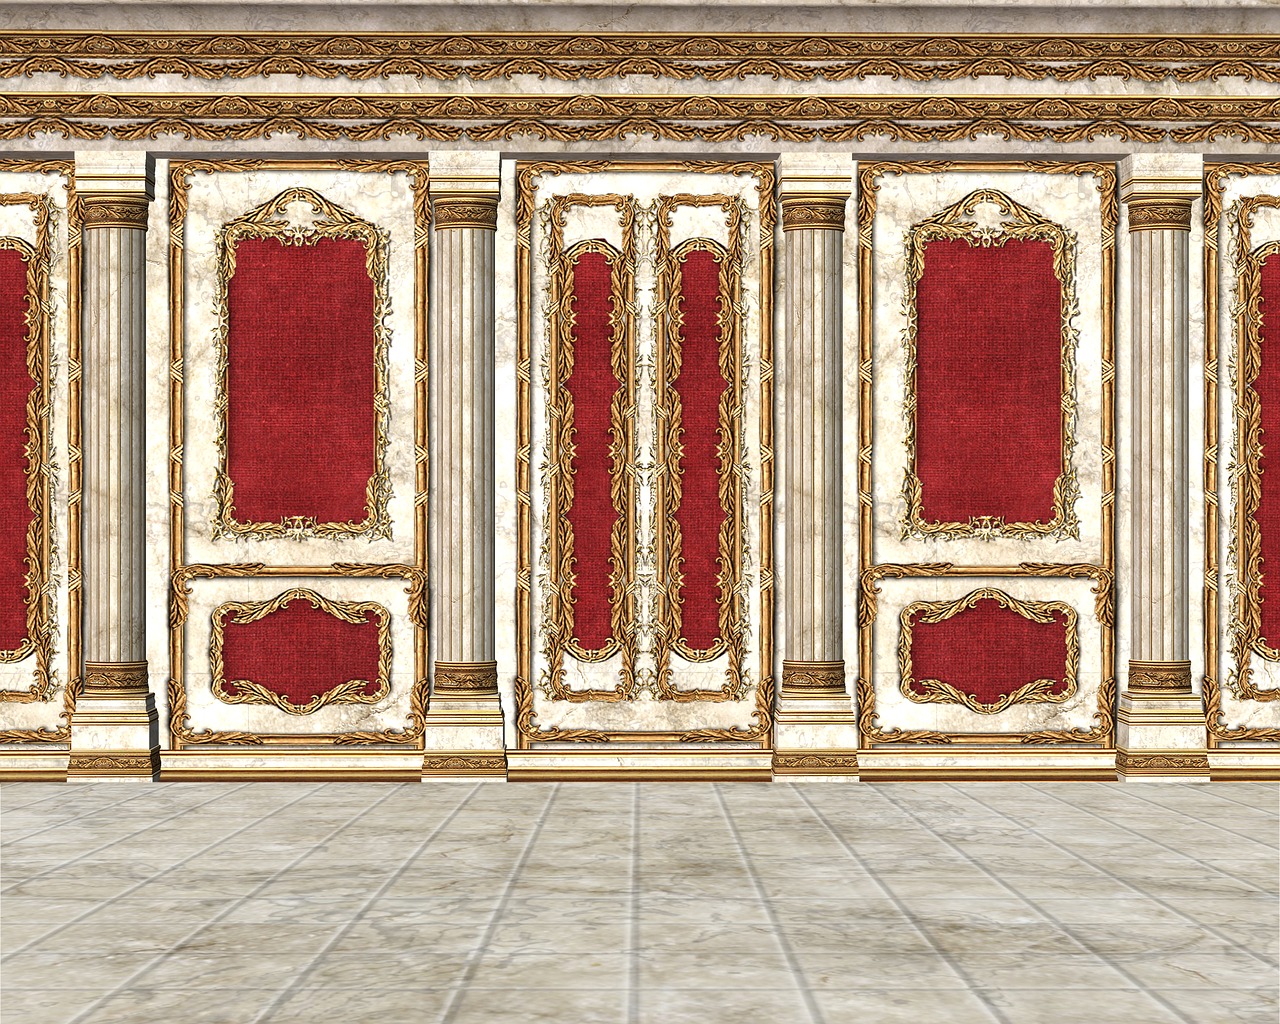 royal room ornate room throne room free photo